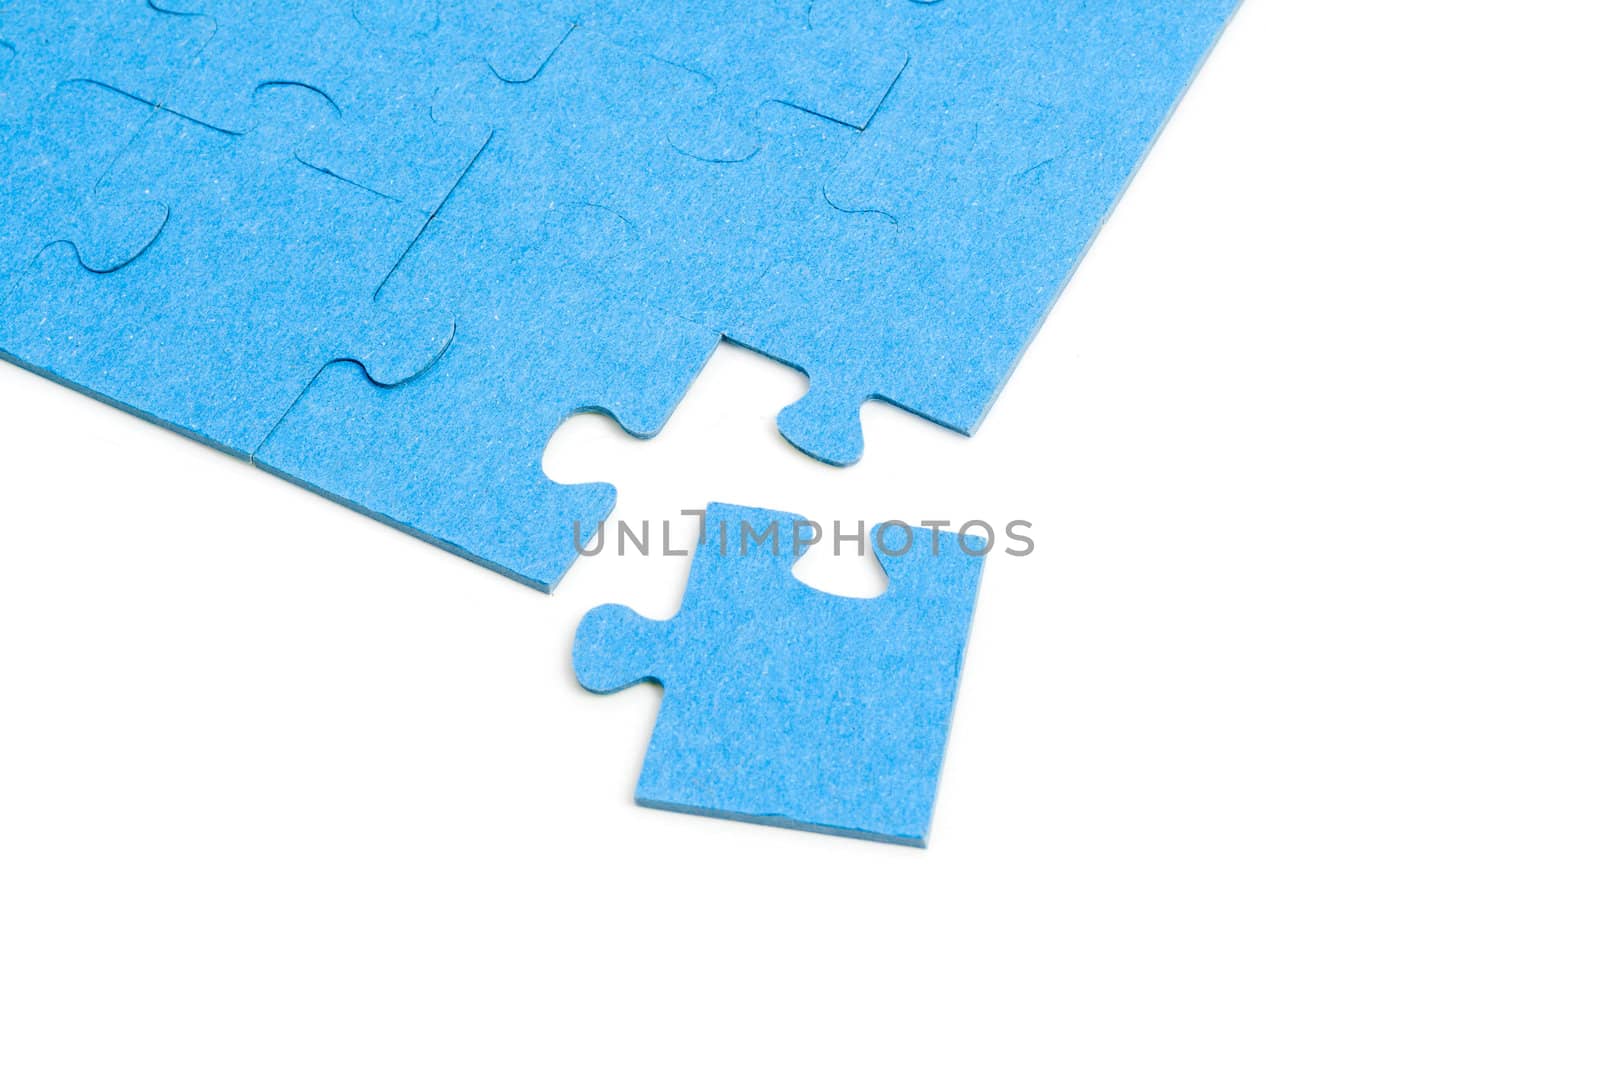 Blue Puzzle isolated on white background